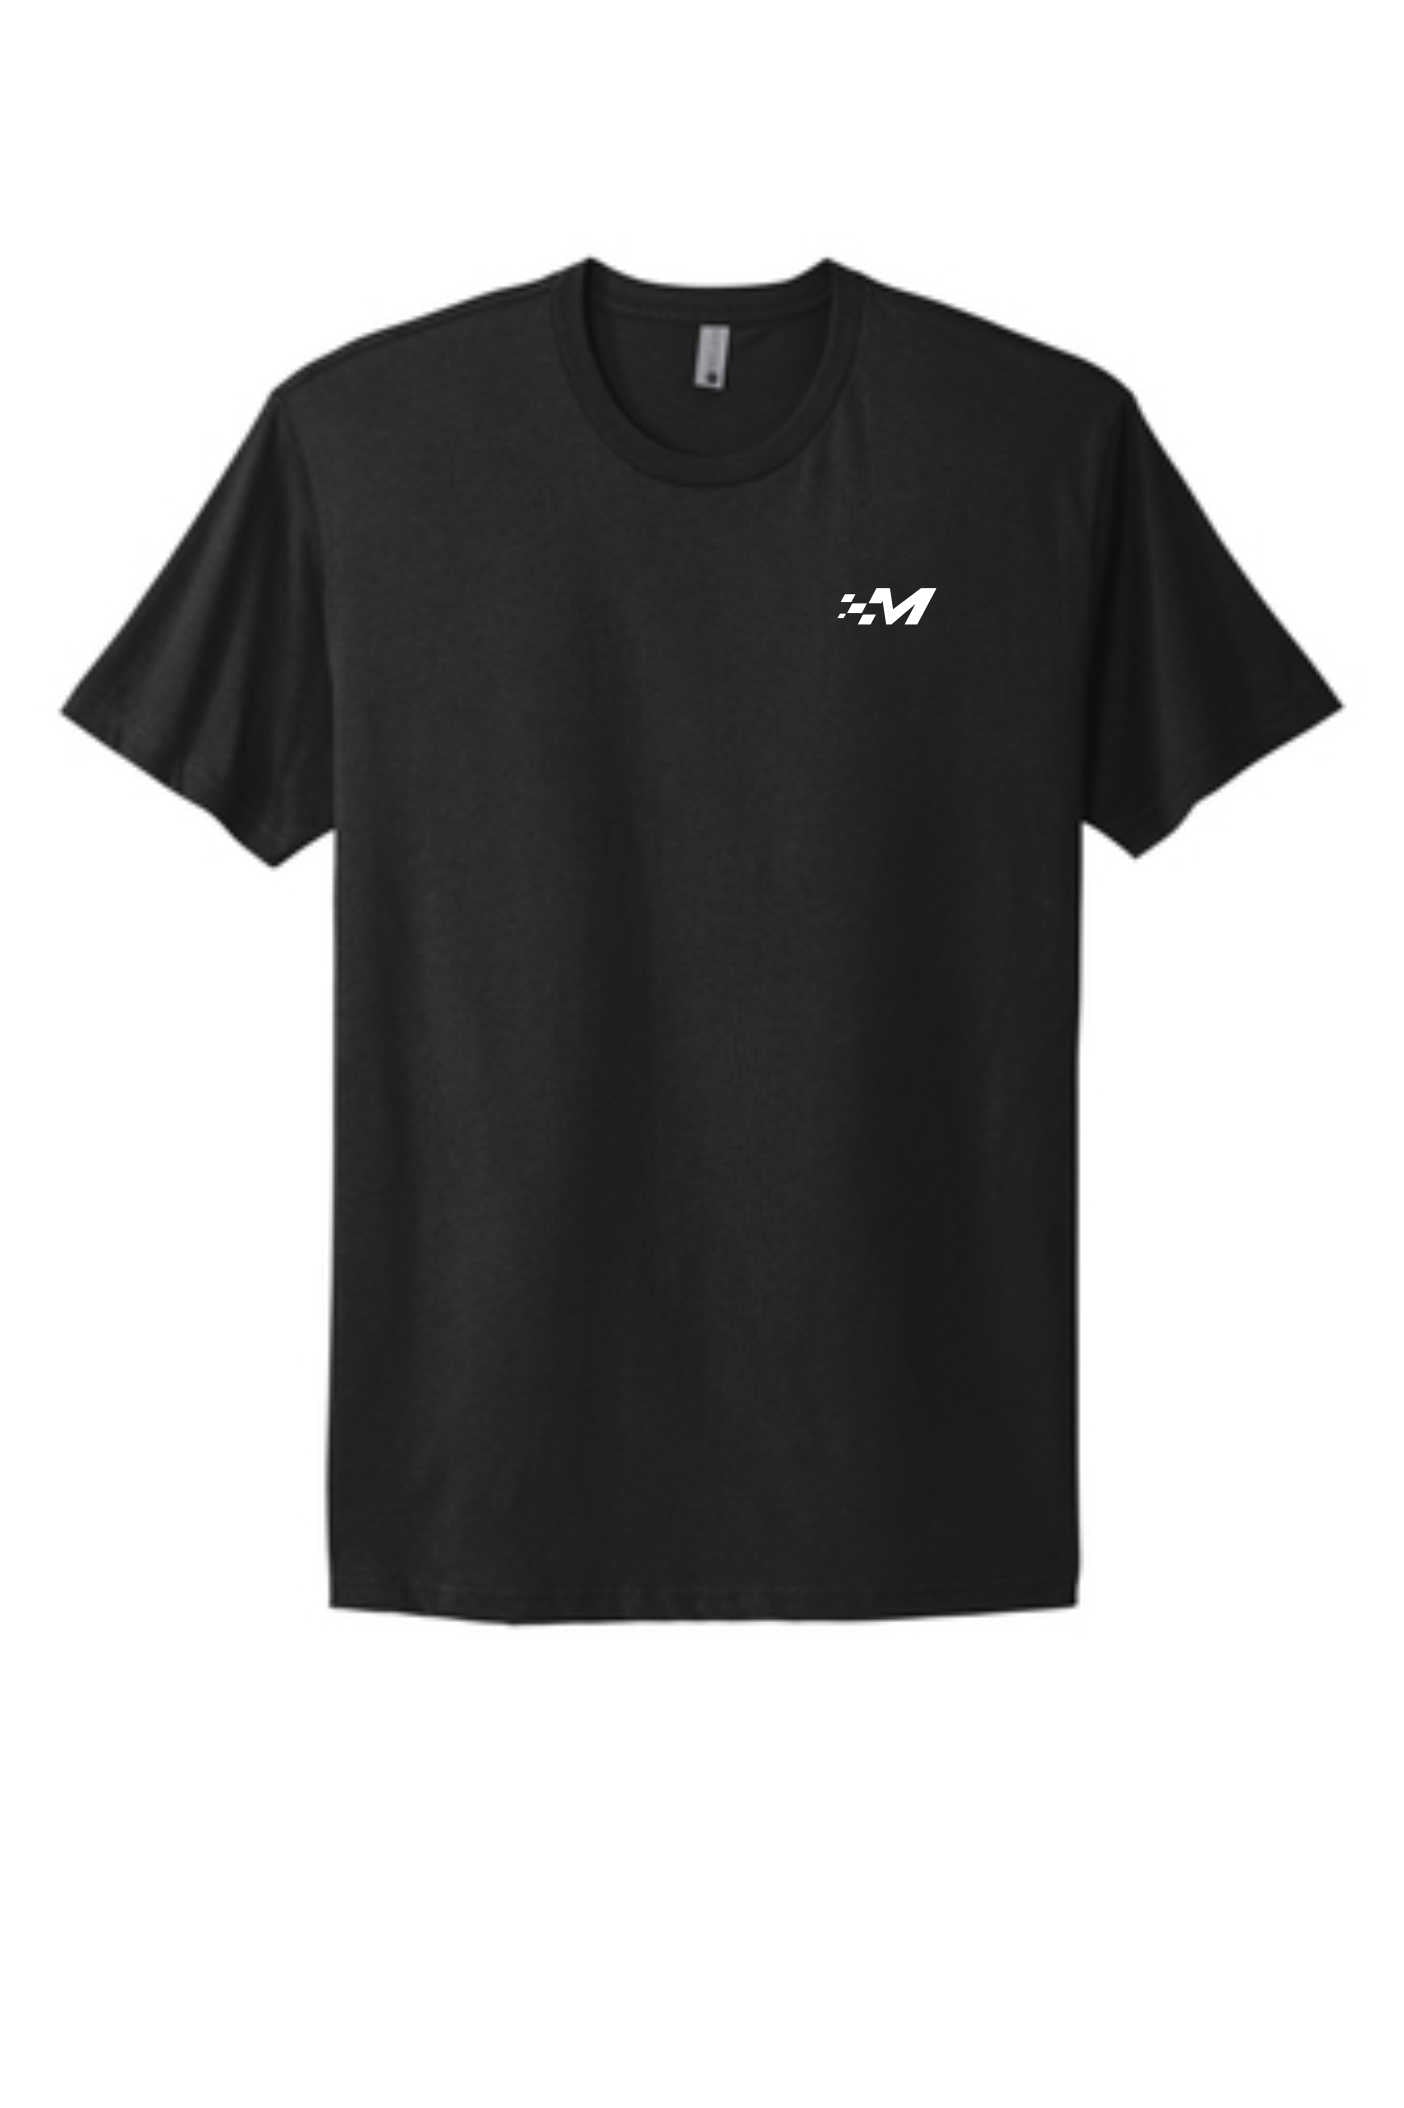 E36 M3 "Generations" - Short Sleeve T-Shirt - Black